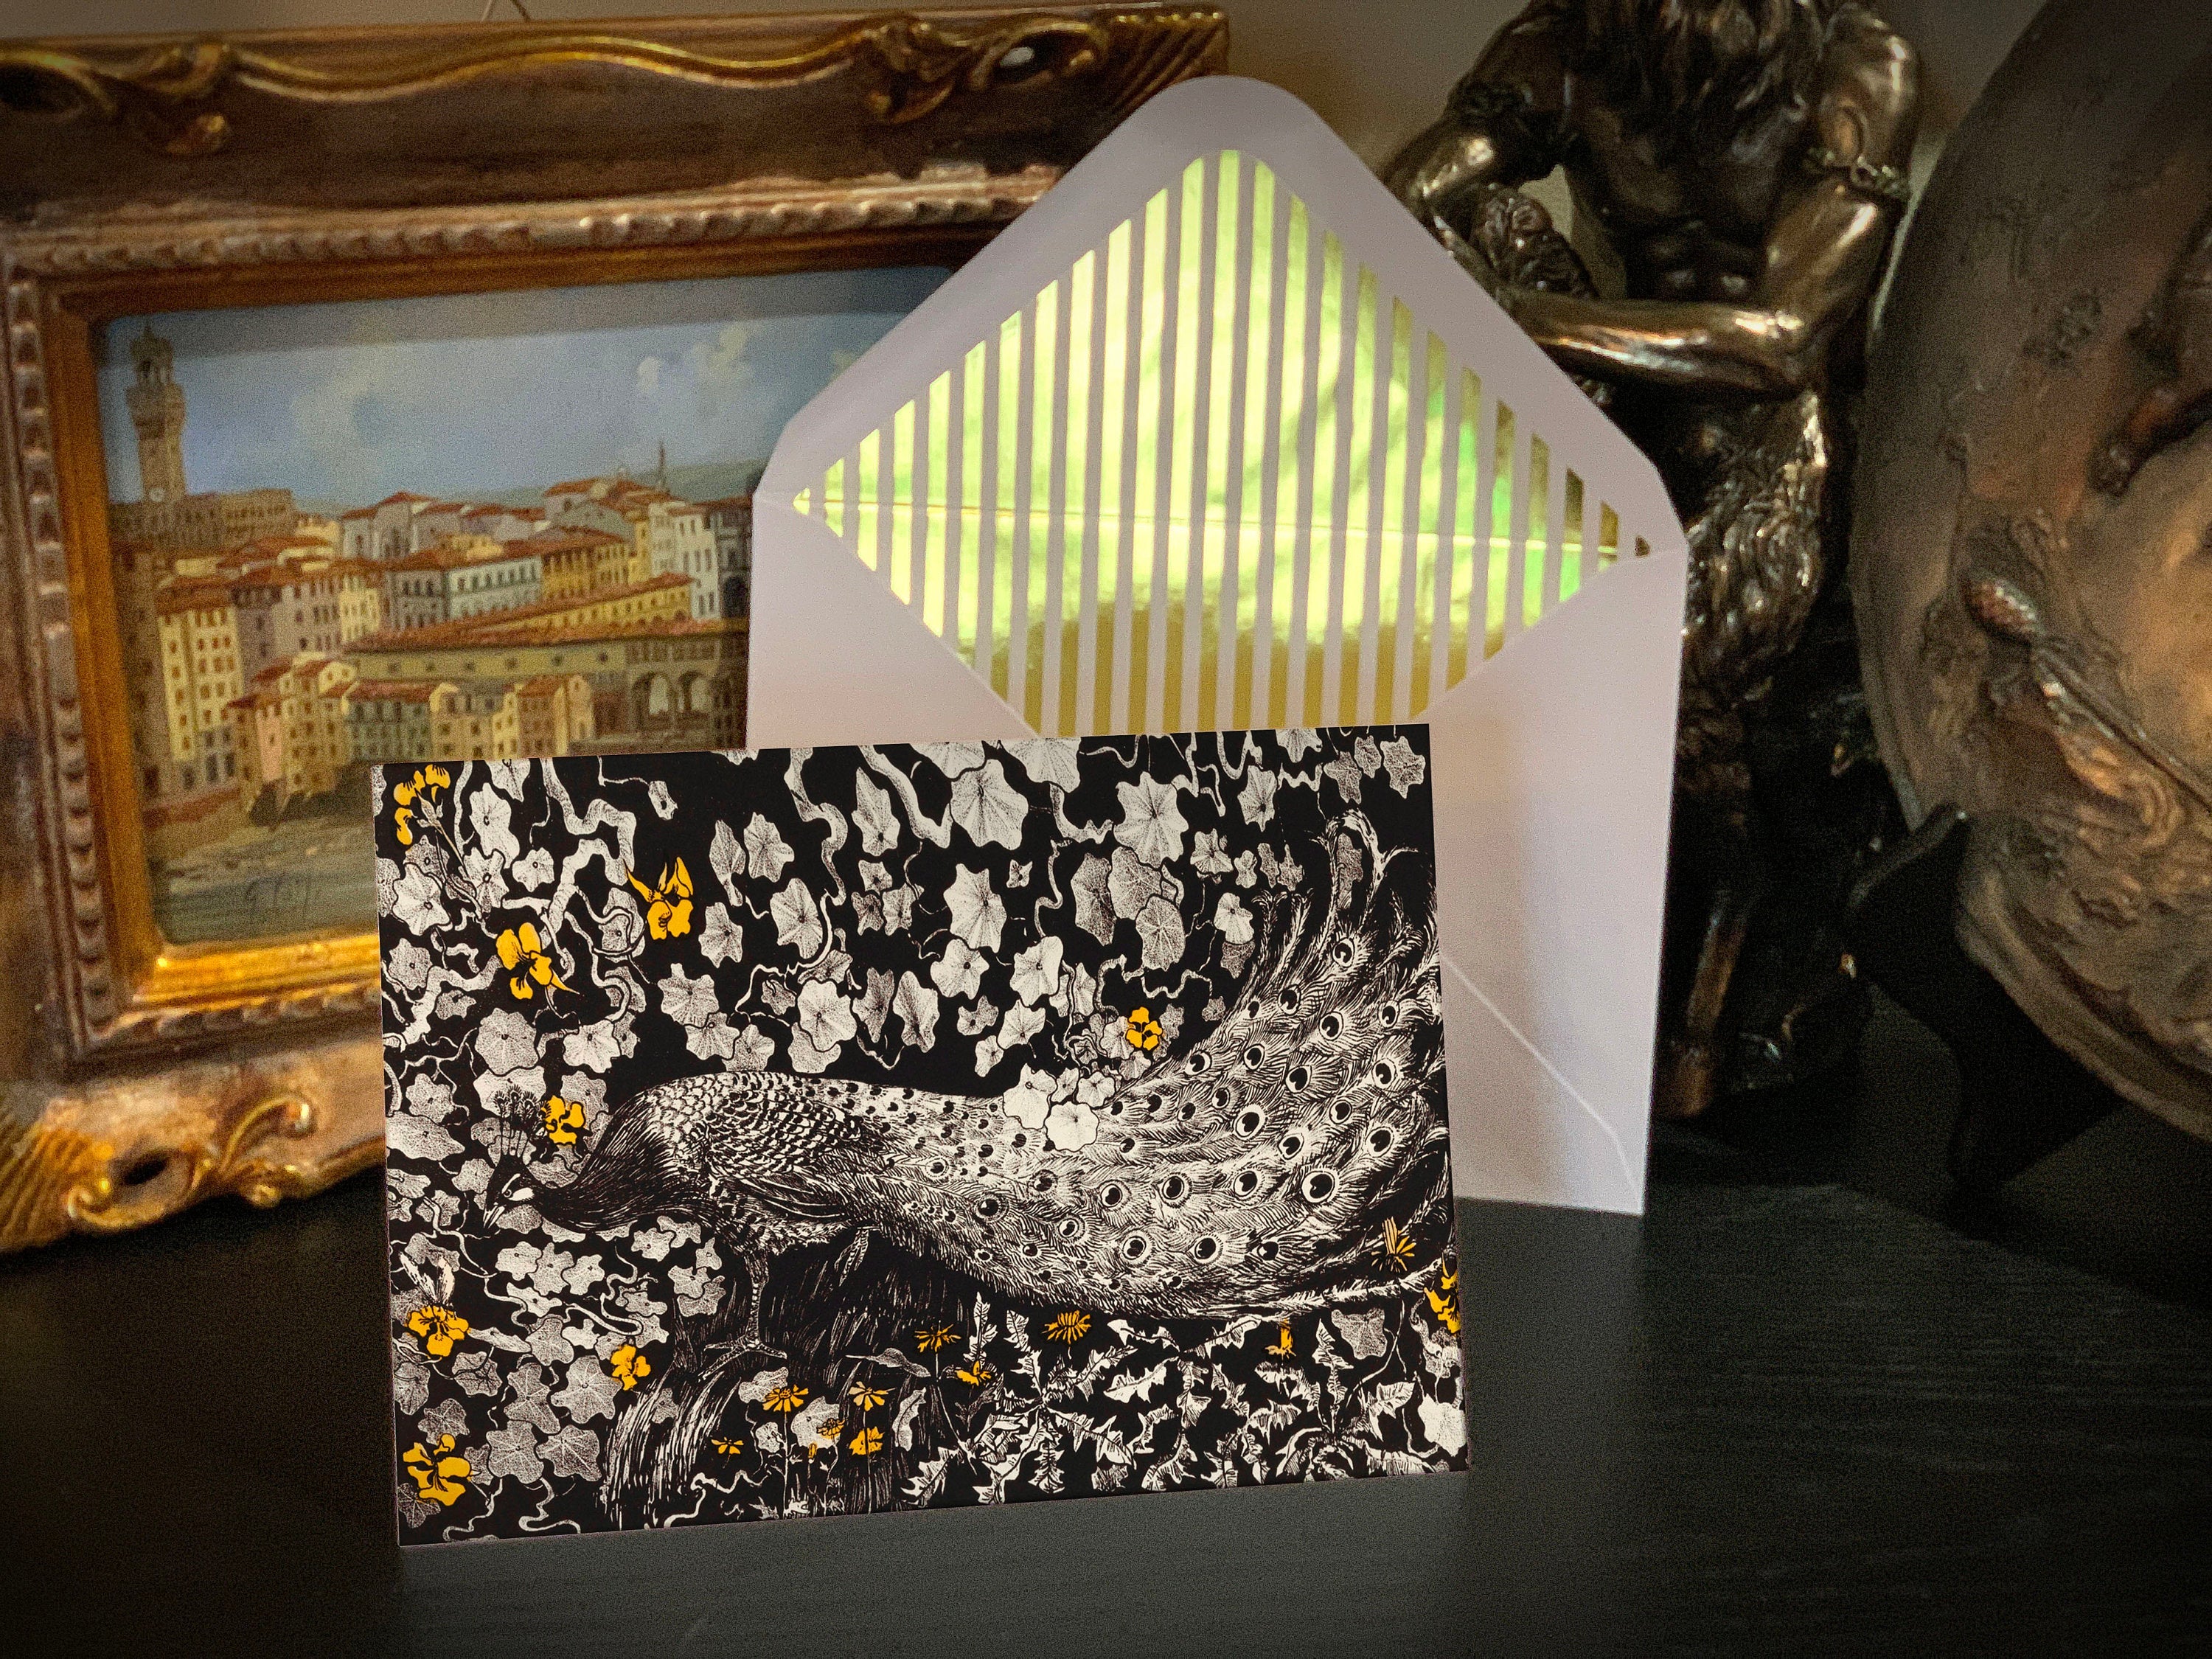 Peacock by Theodorus van Hoytema, Greeting Card with Elegant Striped Gold Foil Envelope, 1 Card/Envelope